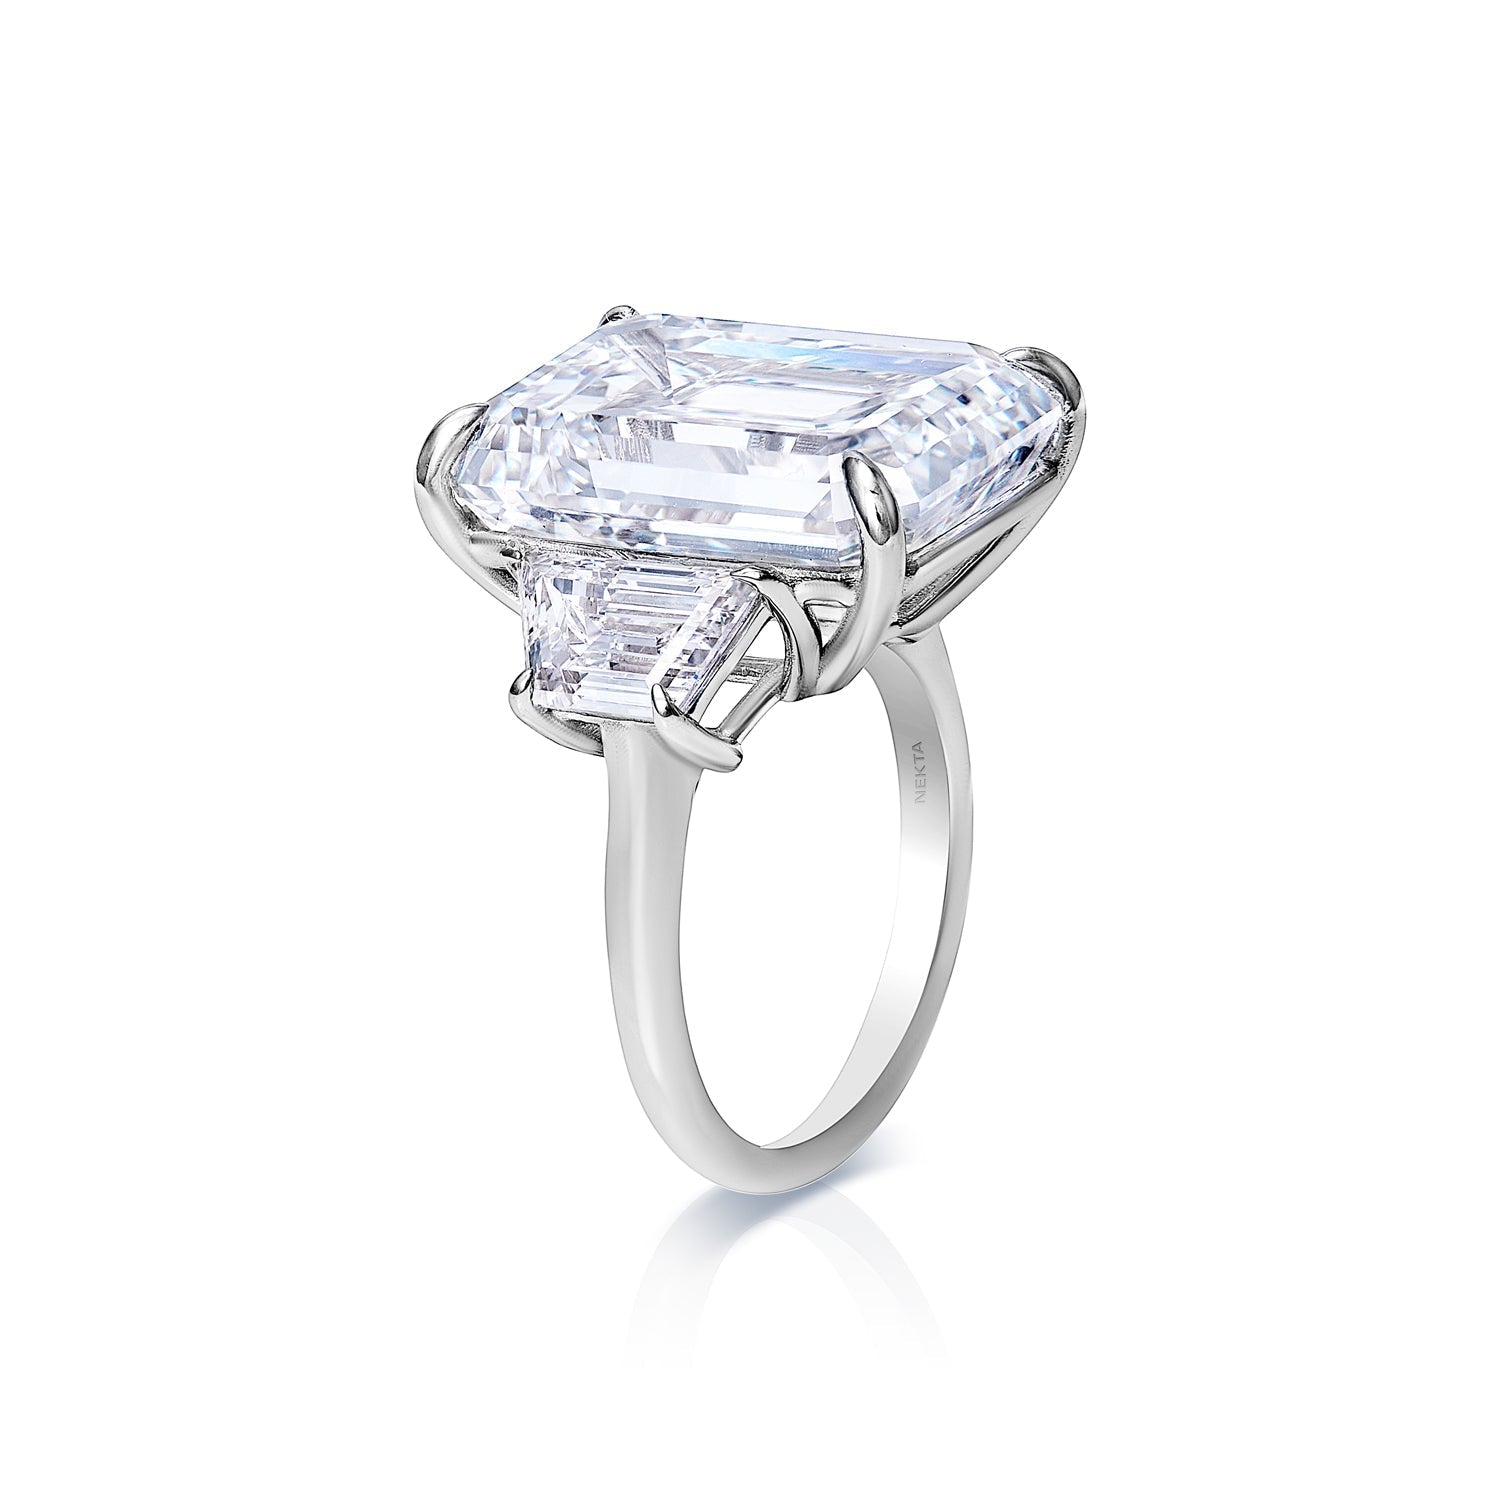 Leighton 23 Carat G VVS2 Emerald Cut Lab Grown Diamond Engagement Ring in Platinum Side View